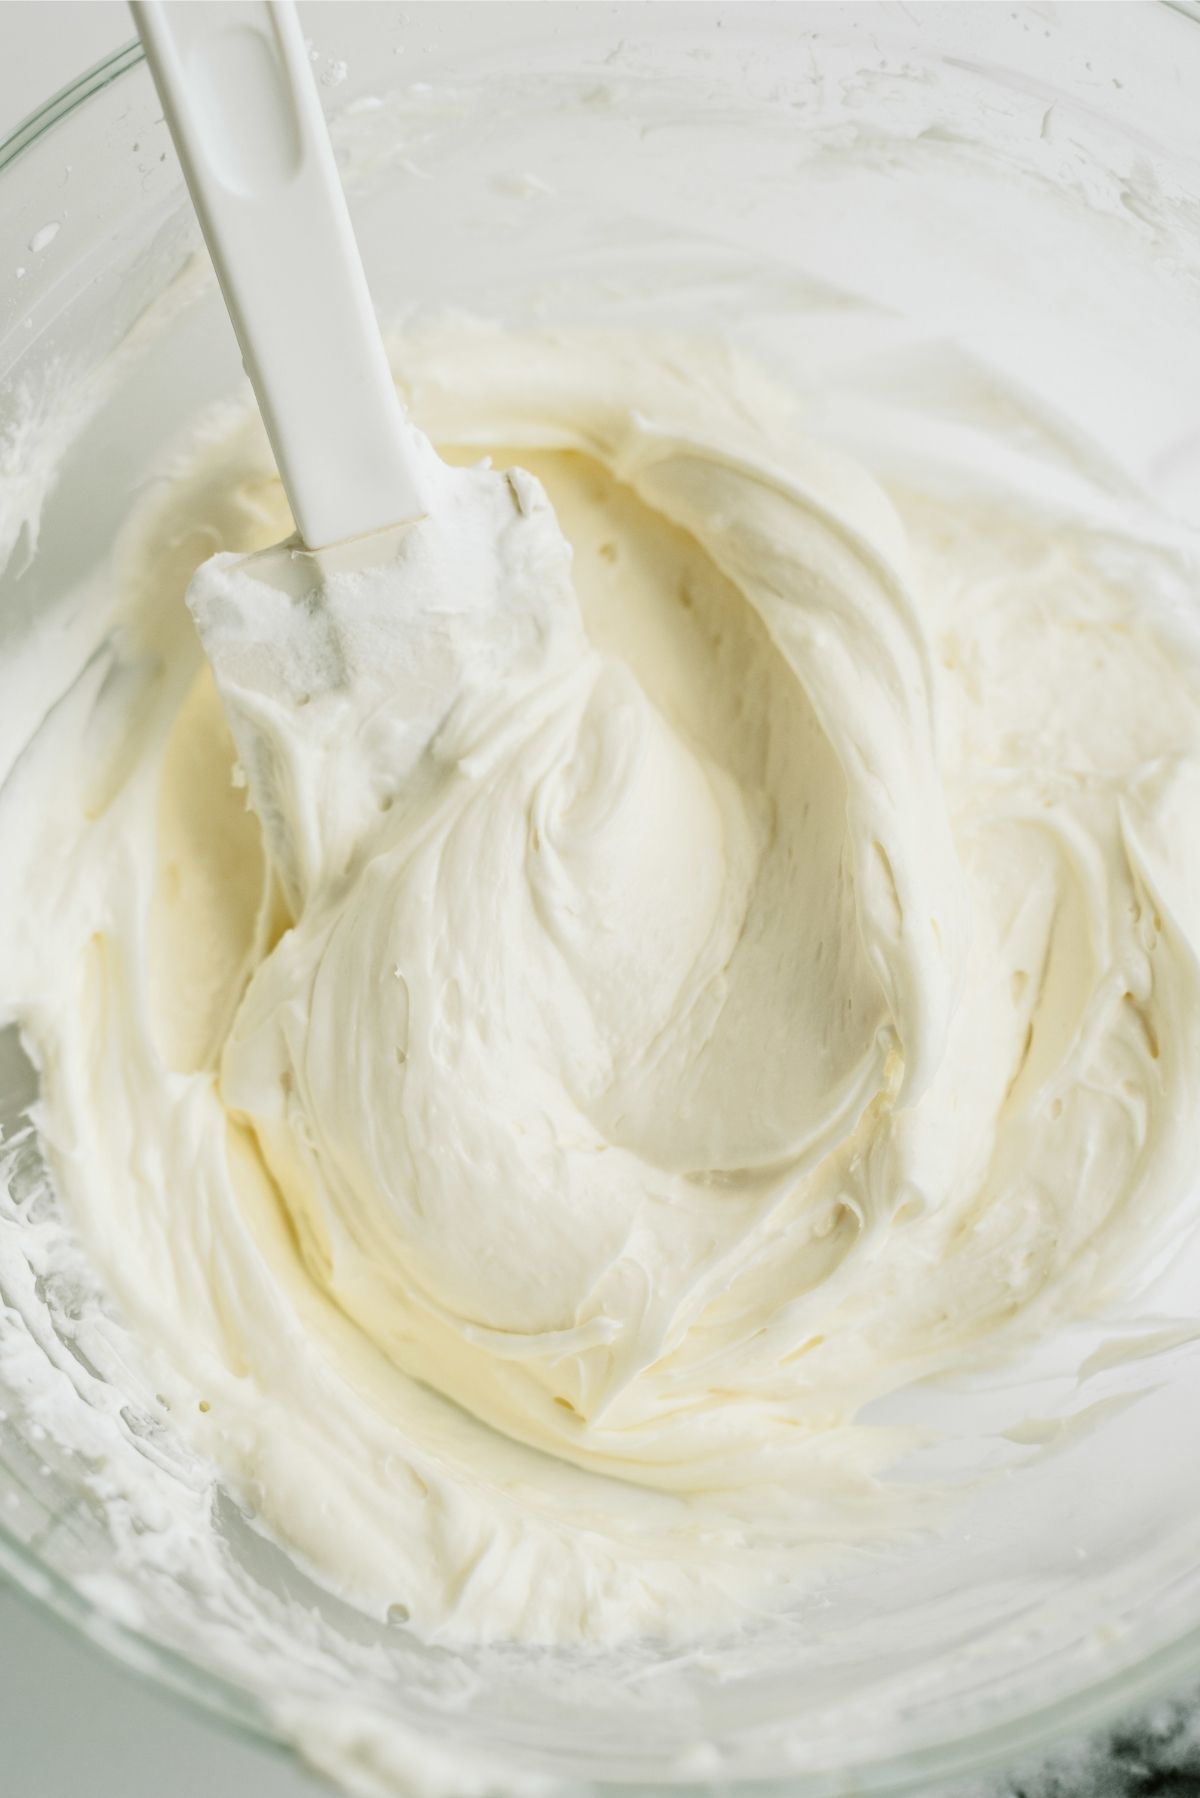 Folding whip cream into cream cheese mixture